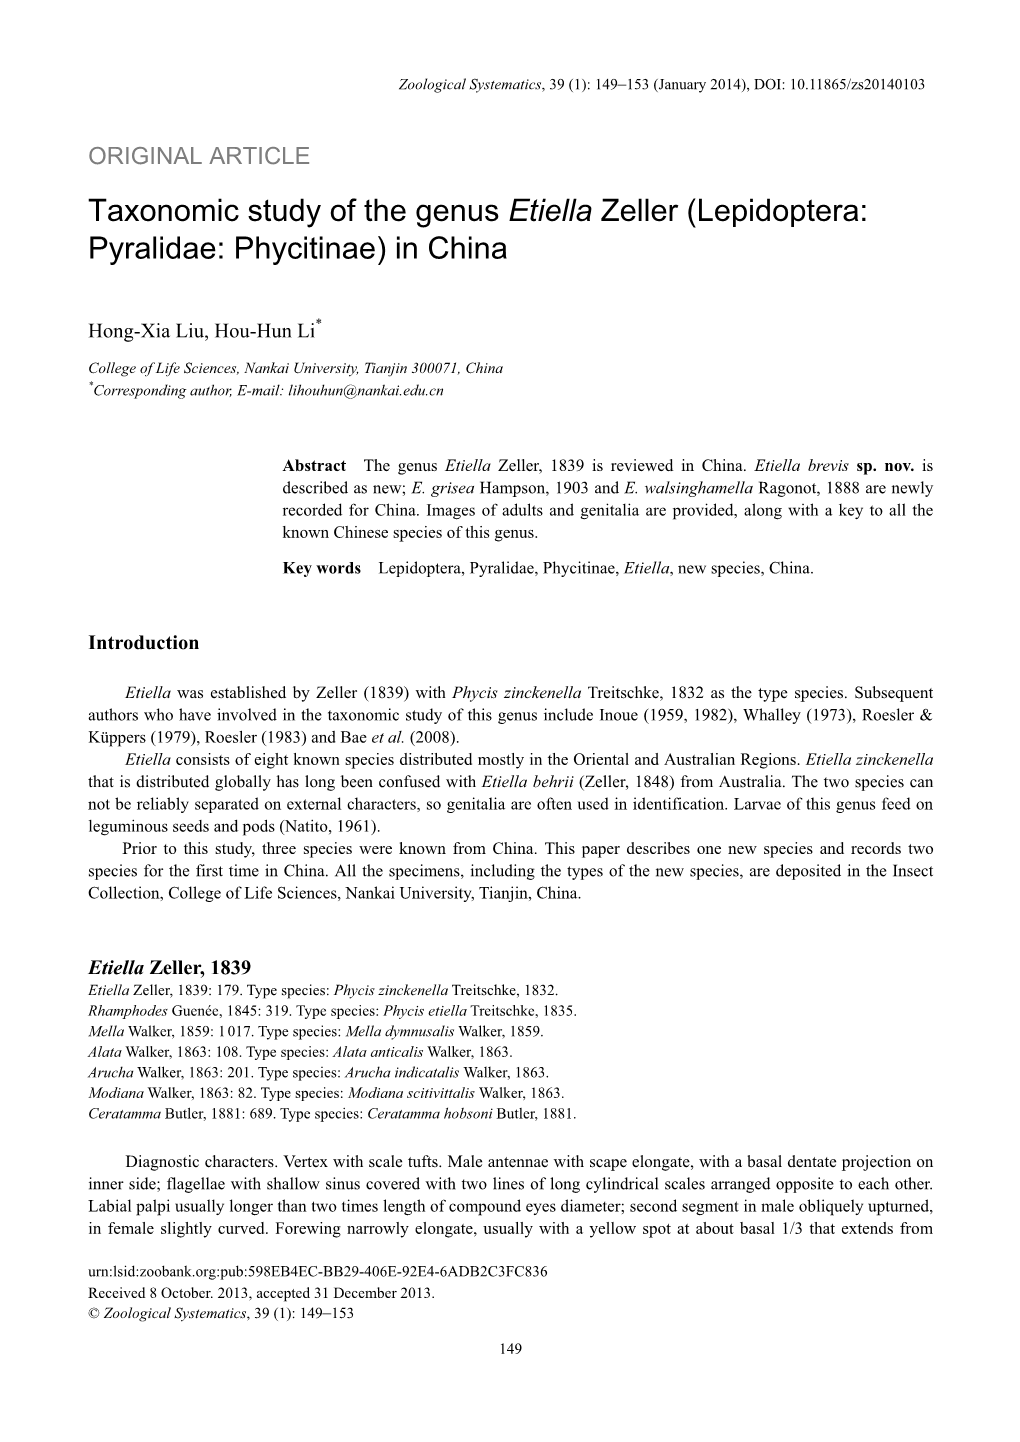 Taxonomic Study of the Genus Etiella Zeller (Lepidoptera: Pyralidae: Phycitinae) in China